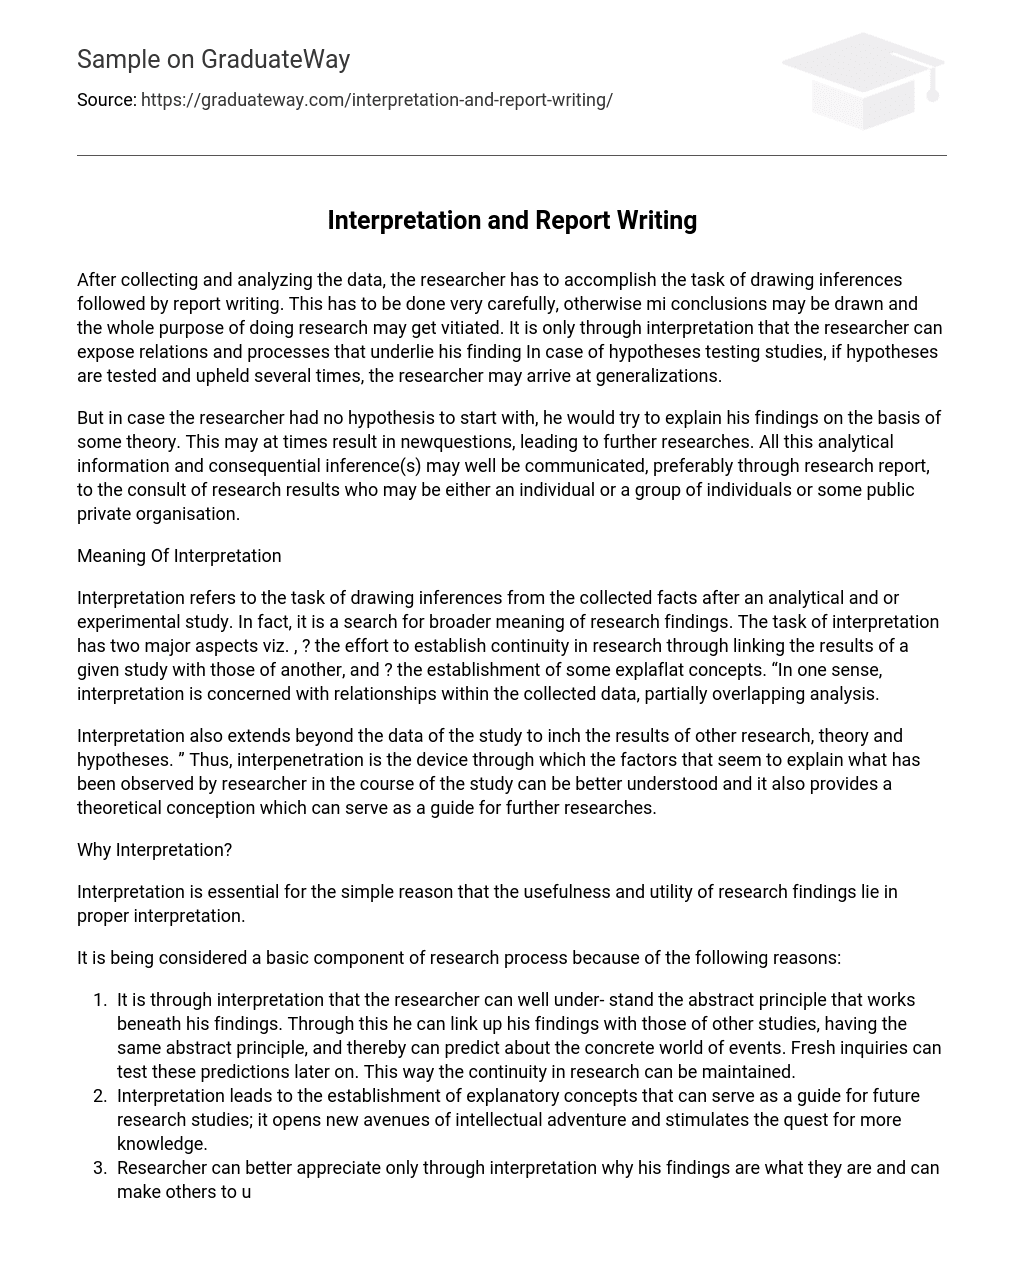 Interpretation and Report Writing